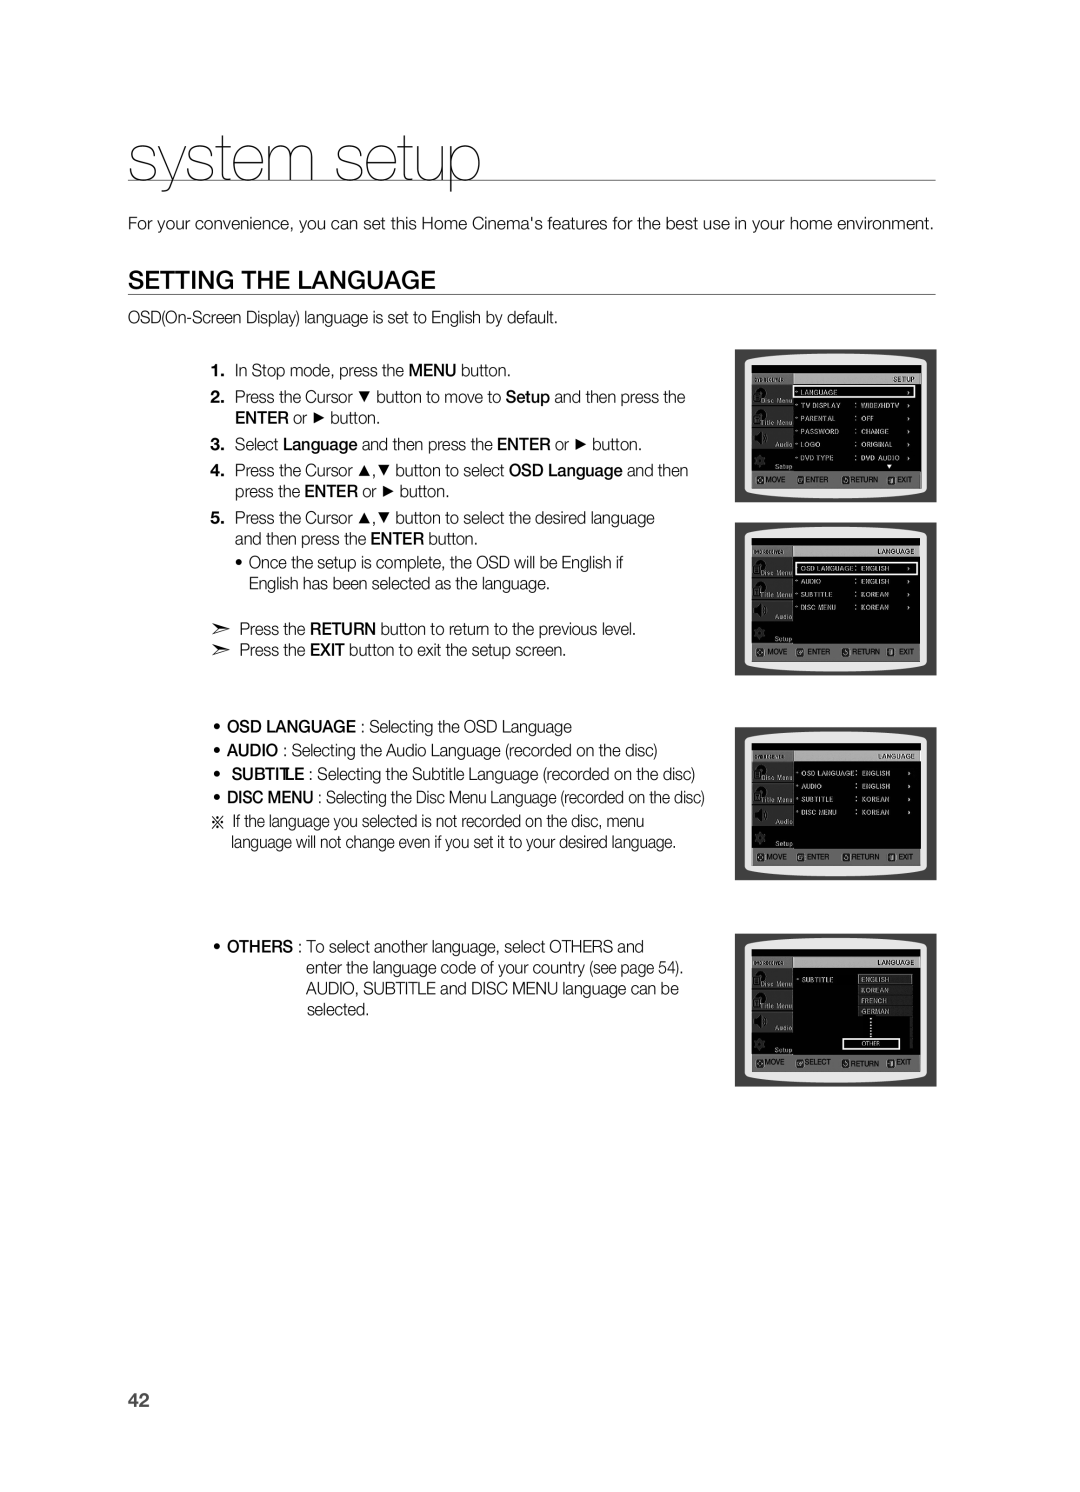 Samsung HT-X710 user manual system setup, Setting the Language 